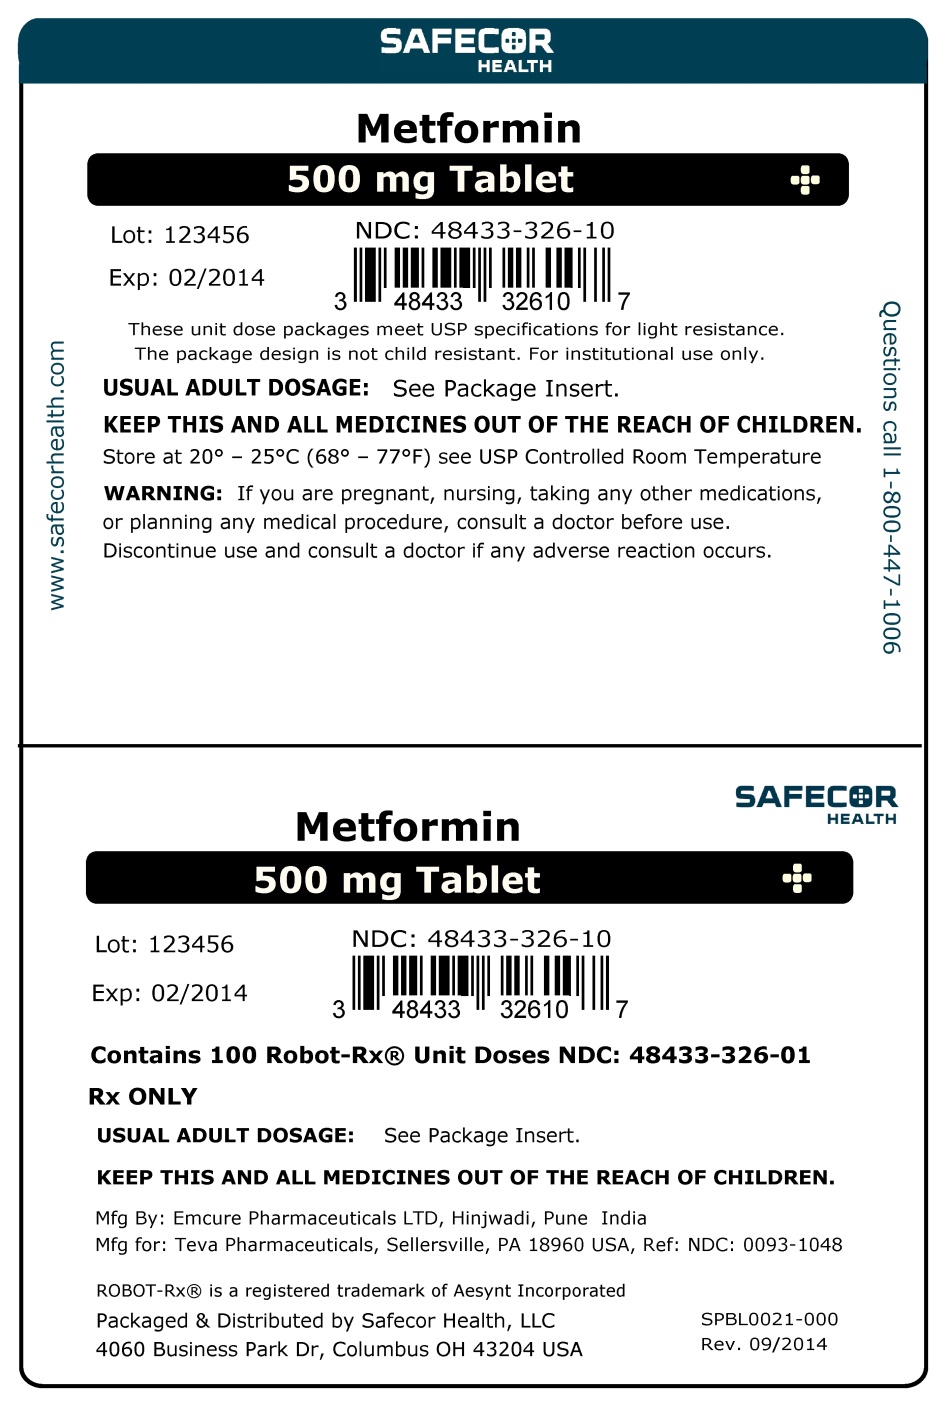 Metformin 500 mg Robot Unit Dose Box Label